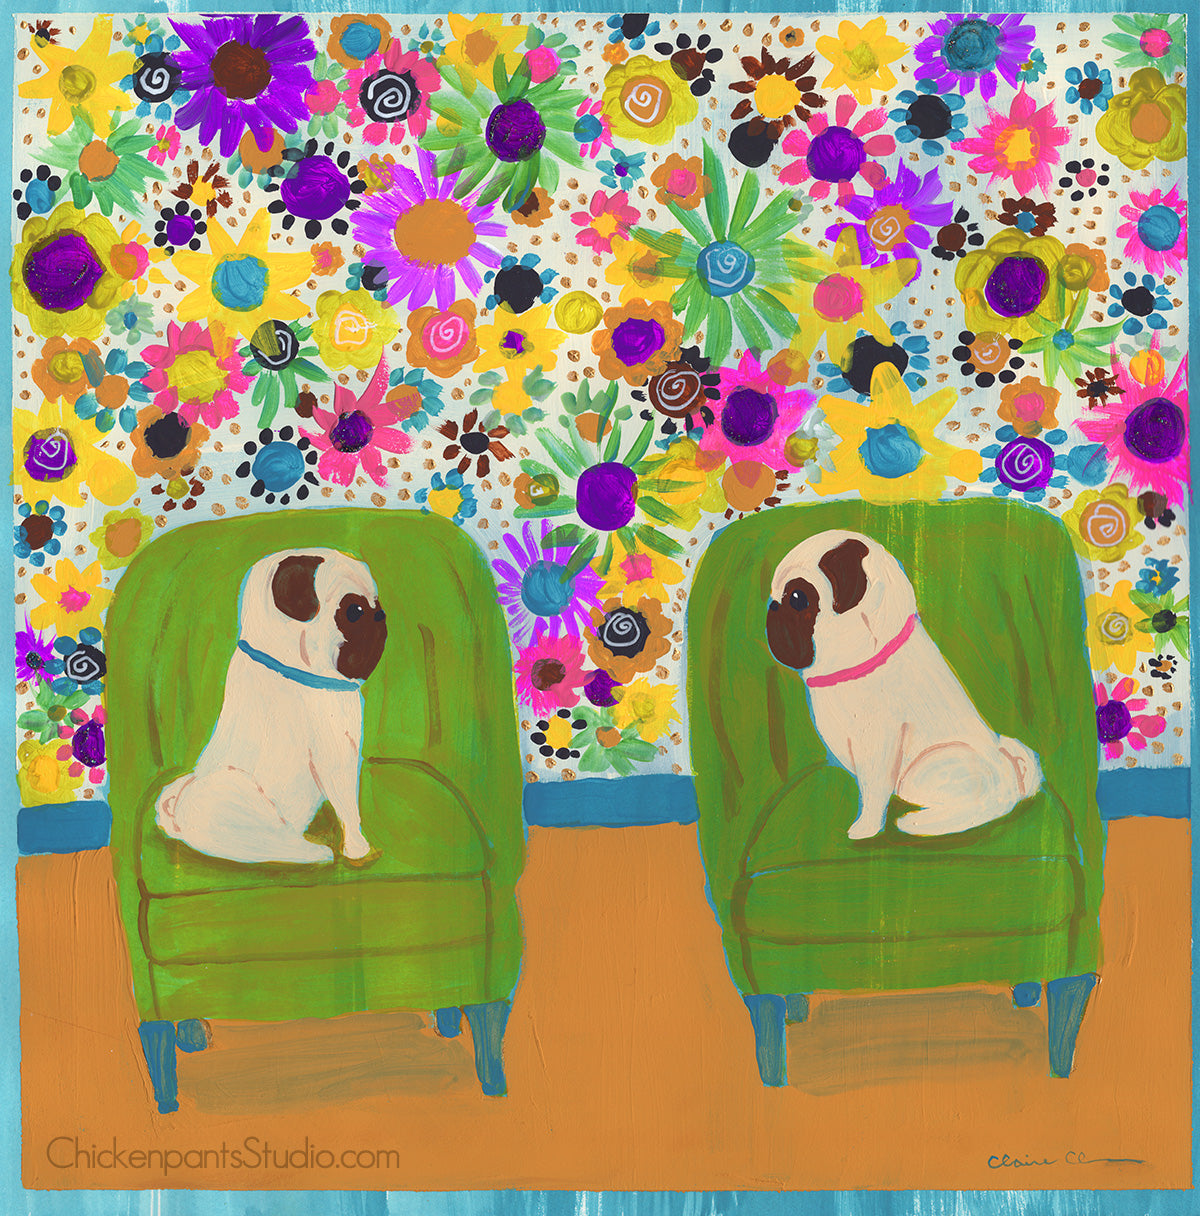 Flower Wall - Original Pug Painting